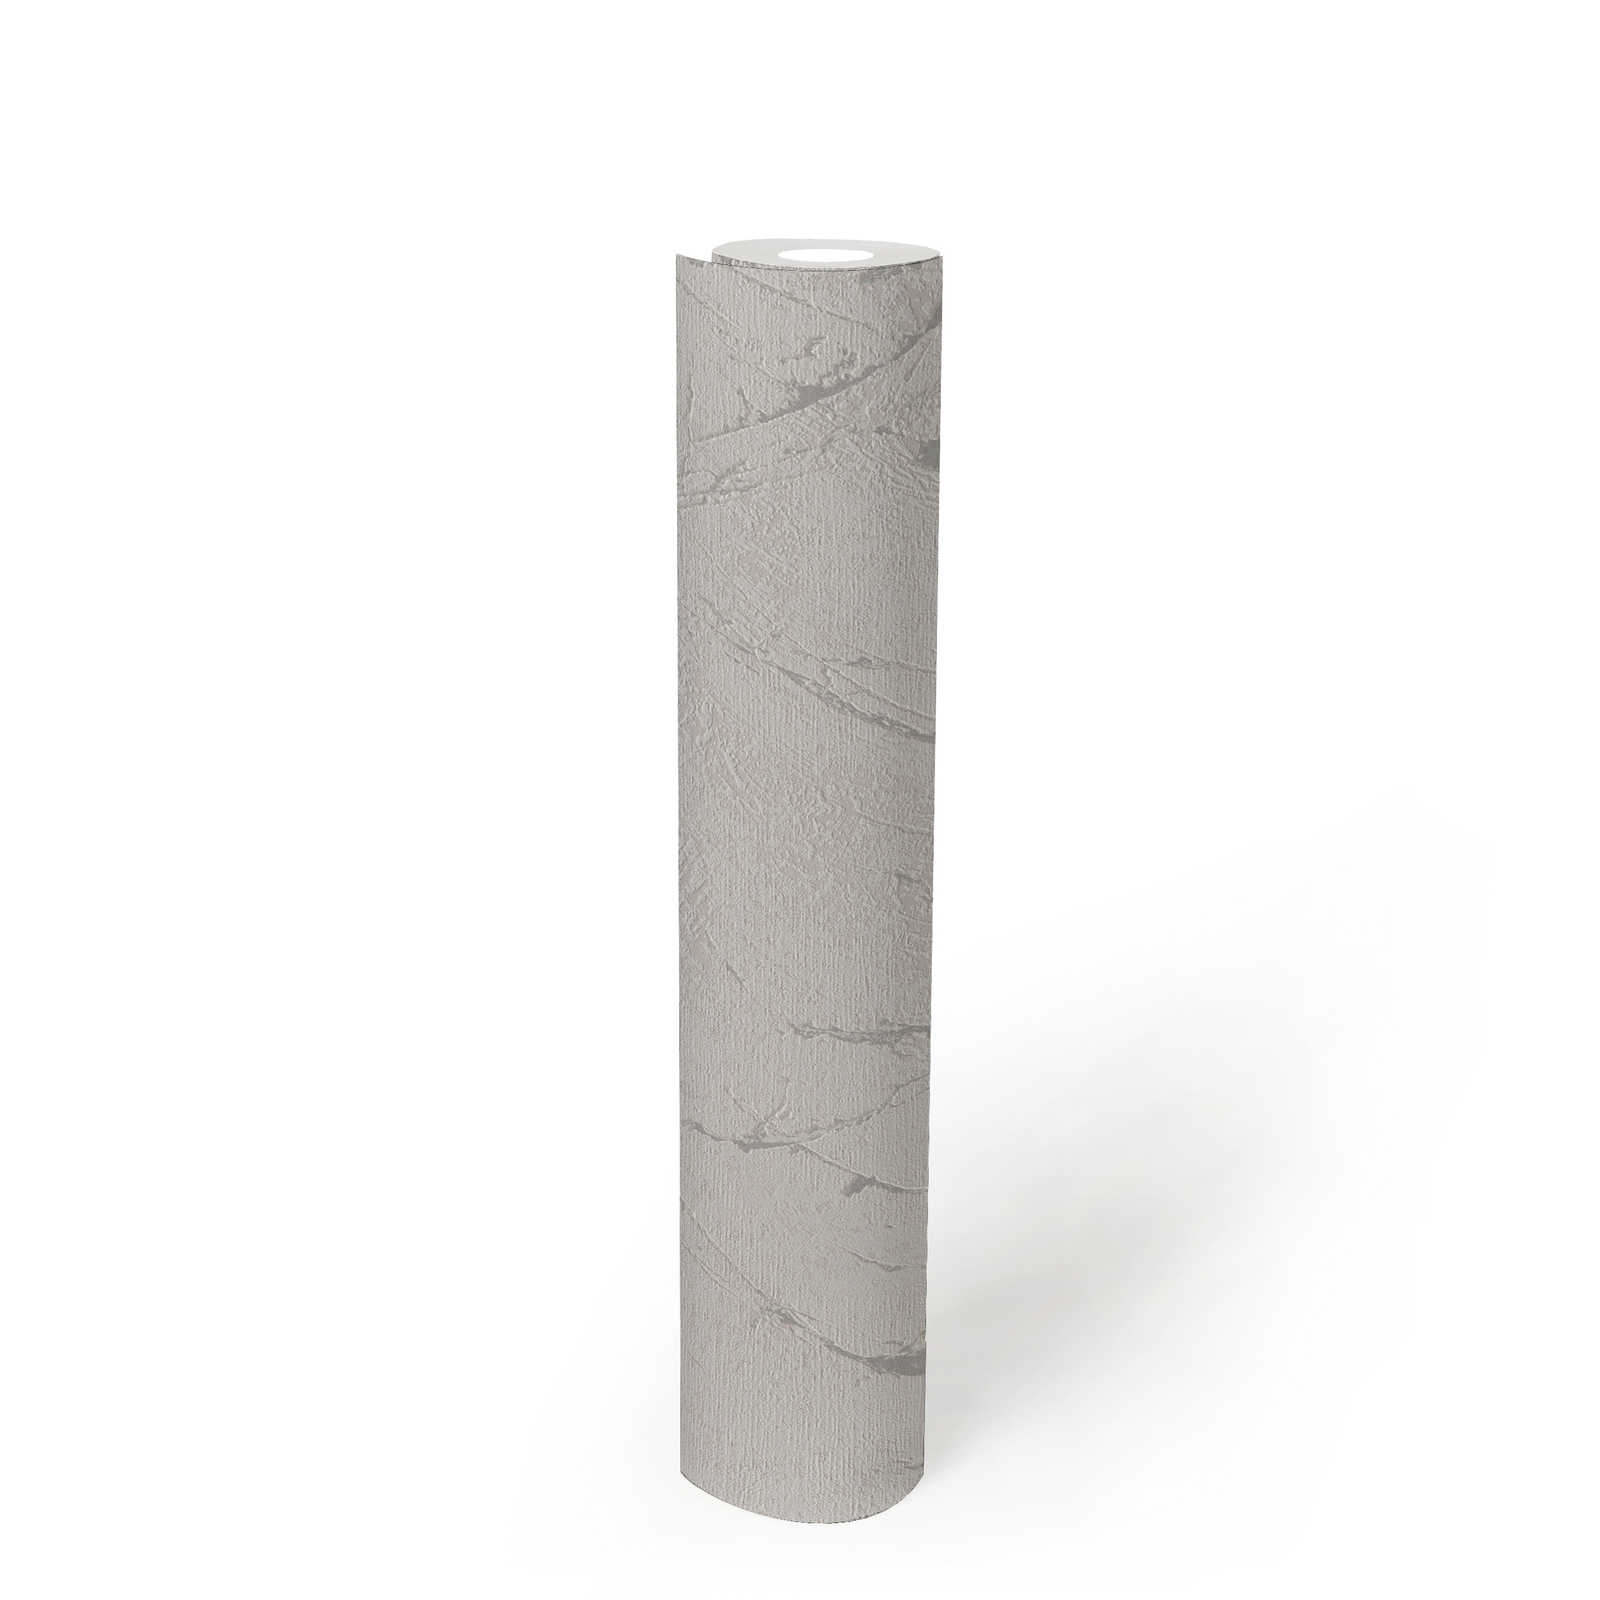             Vliestapete in Putzoptik mit Metallic- Effekt – Grau, Silber, Metallic
        